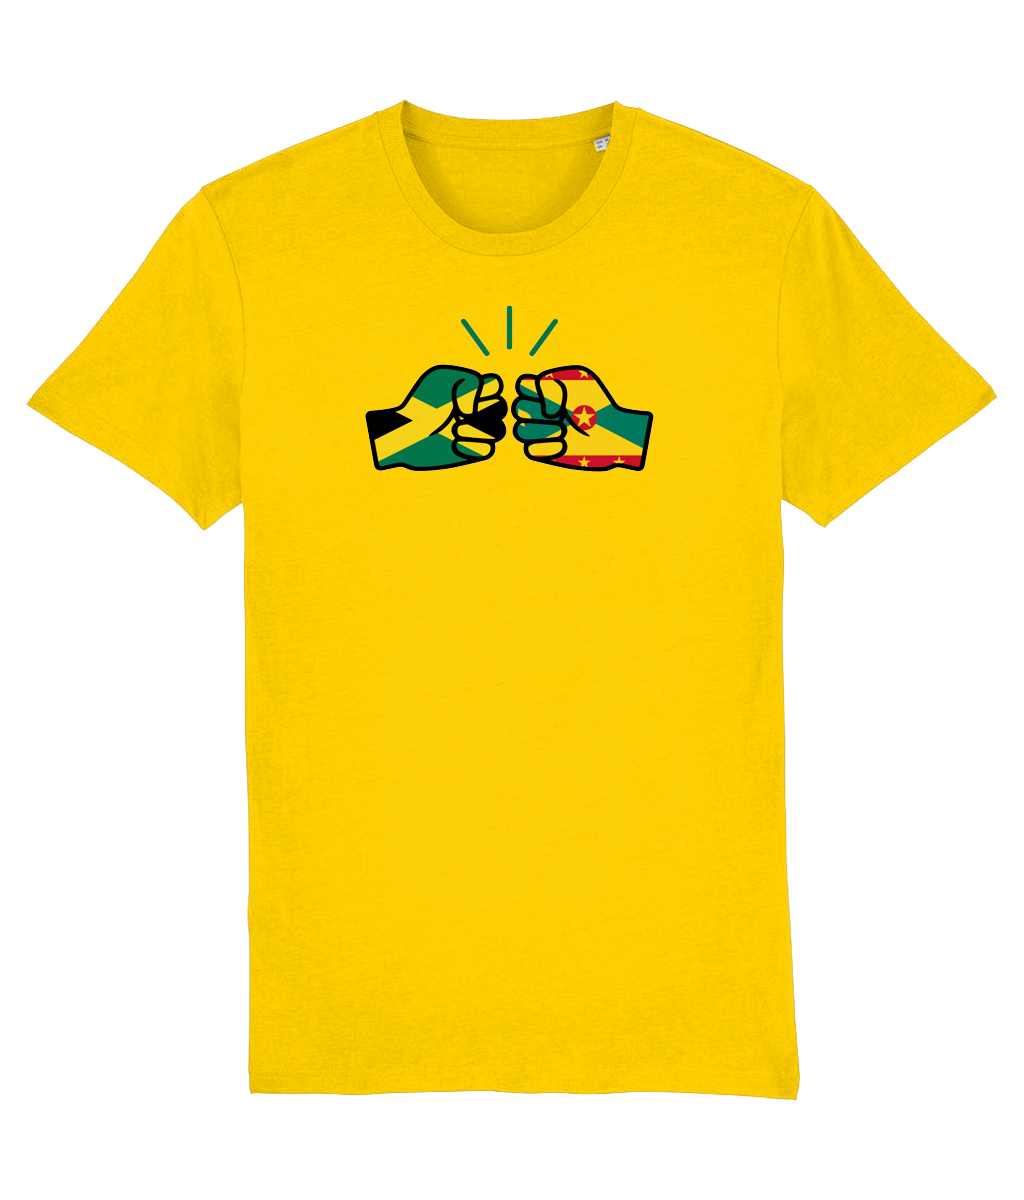 We Run Tings, Jamaica & Grenada, Men's, Dual Parentage, Organic Ring Spun Cotton T-Shirt, Outline